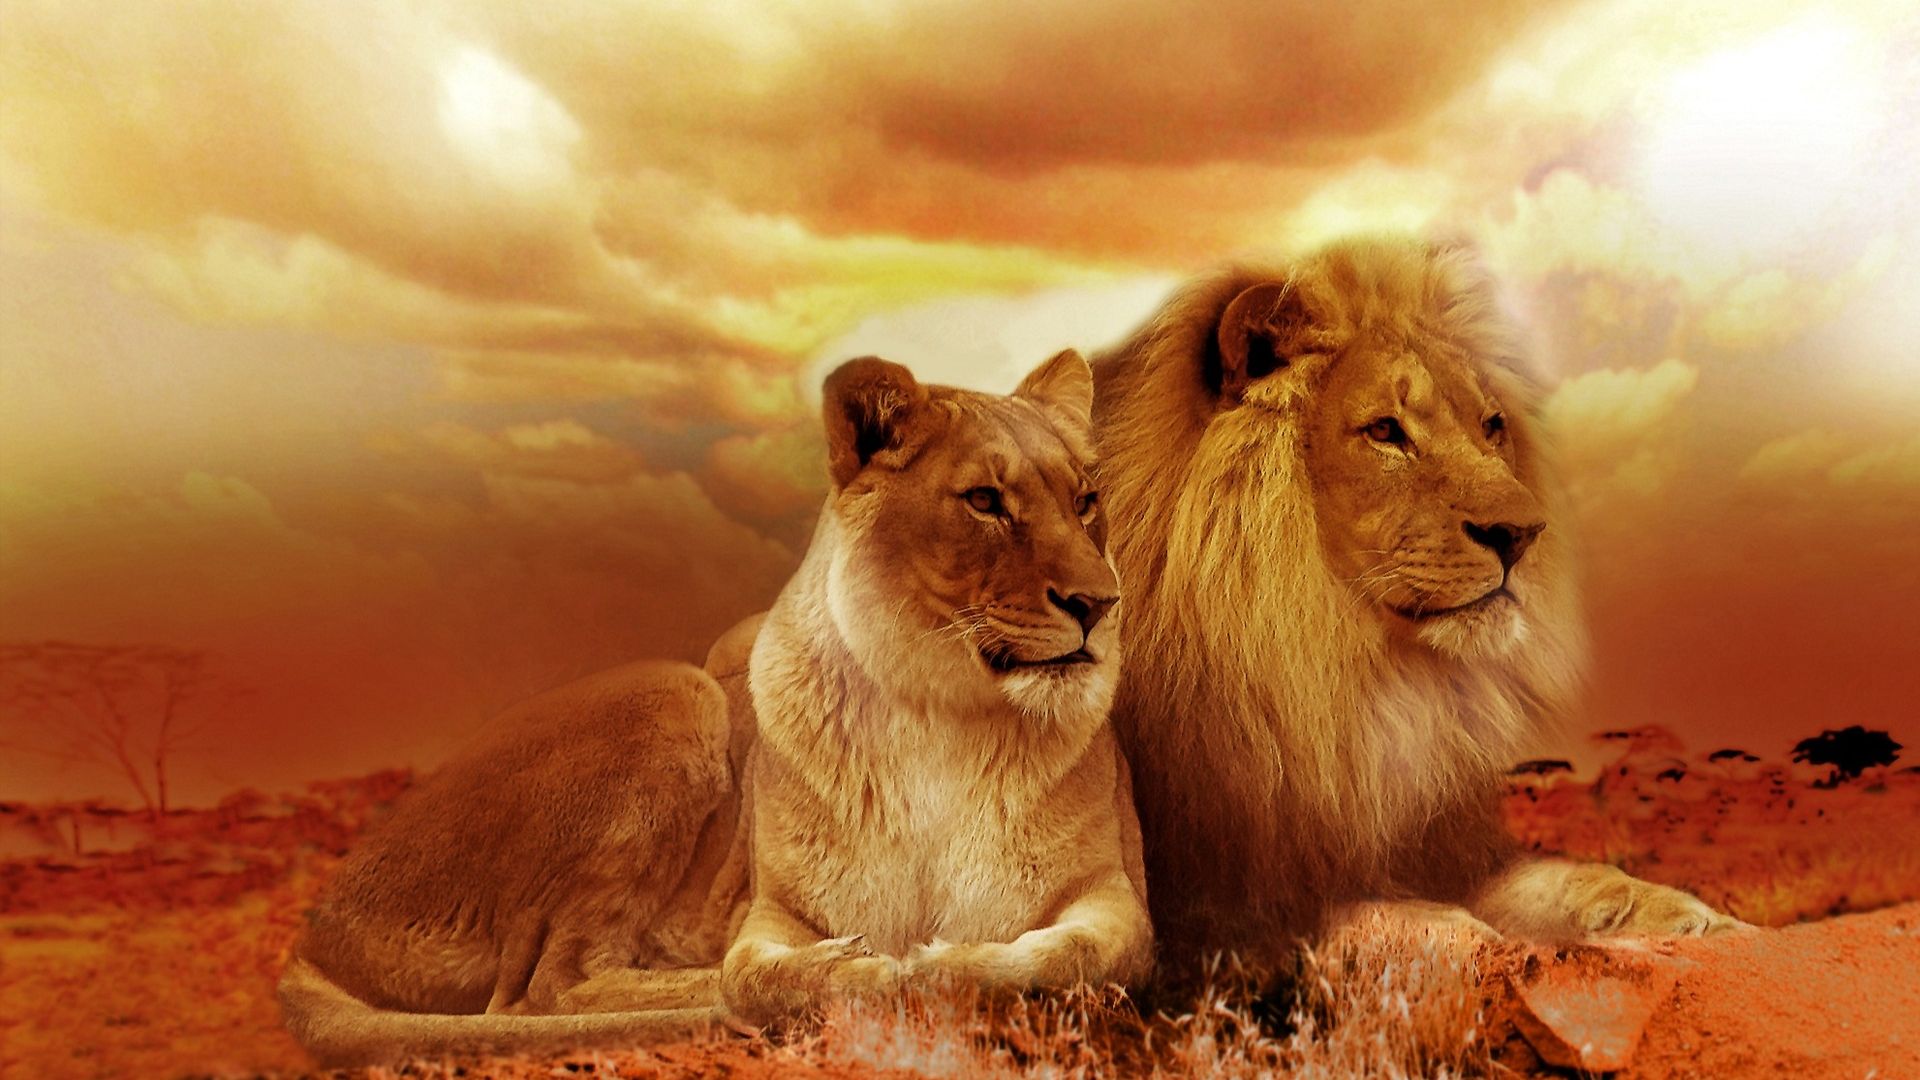 Lions against a sunset orange sky